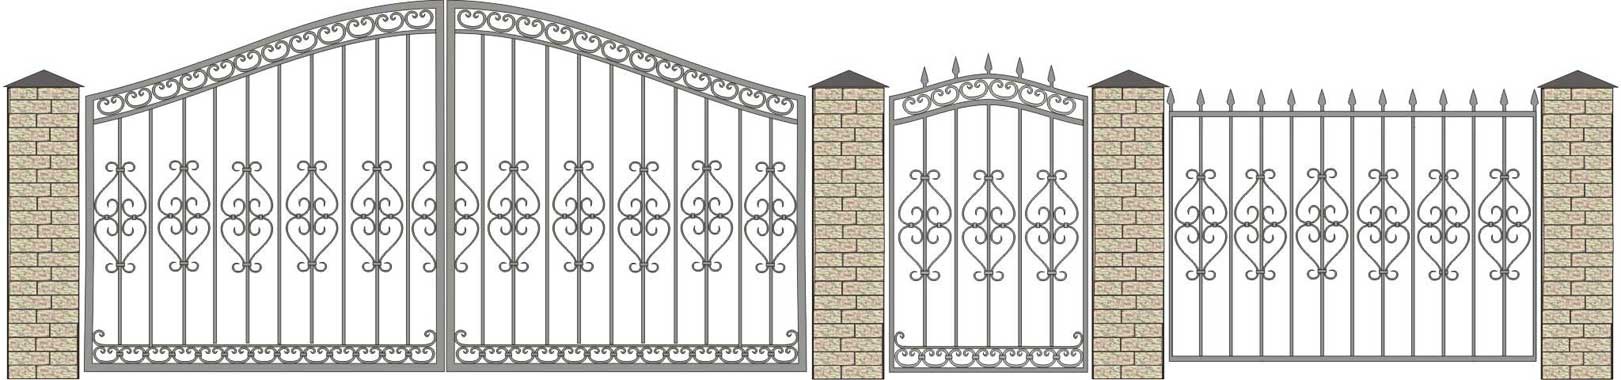 Ворота, забор и калитка 1023